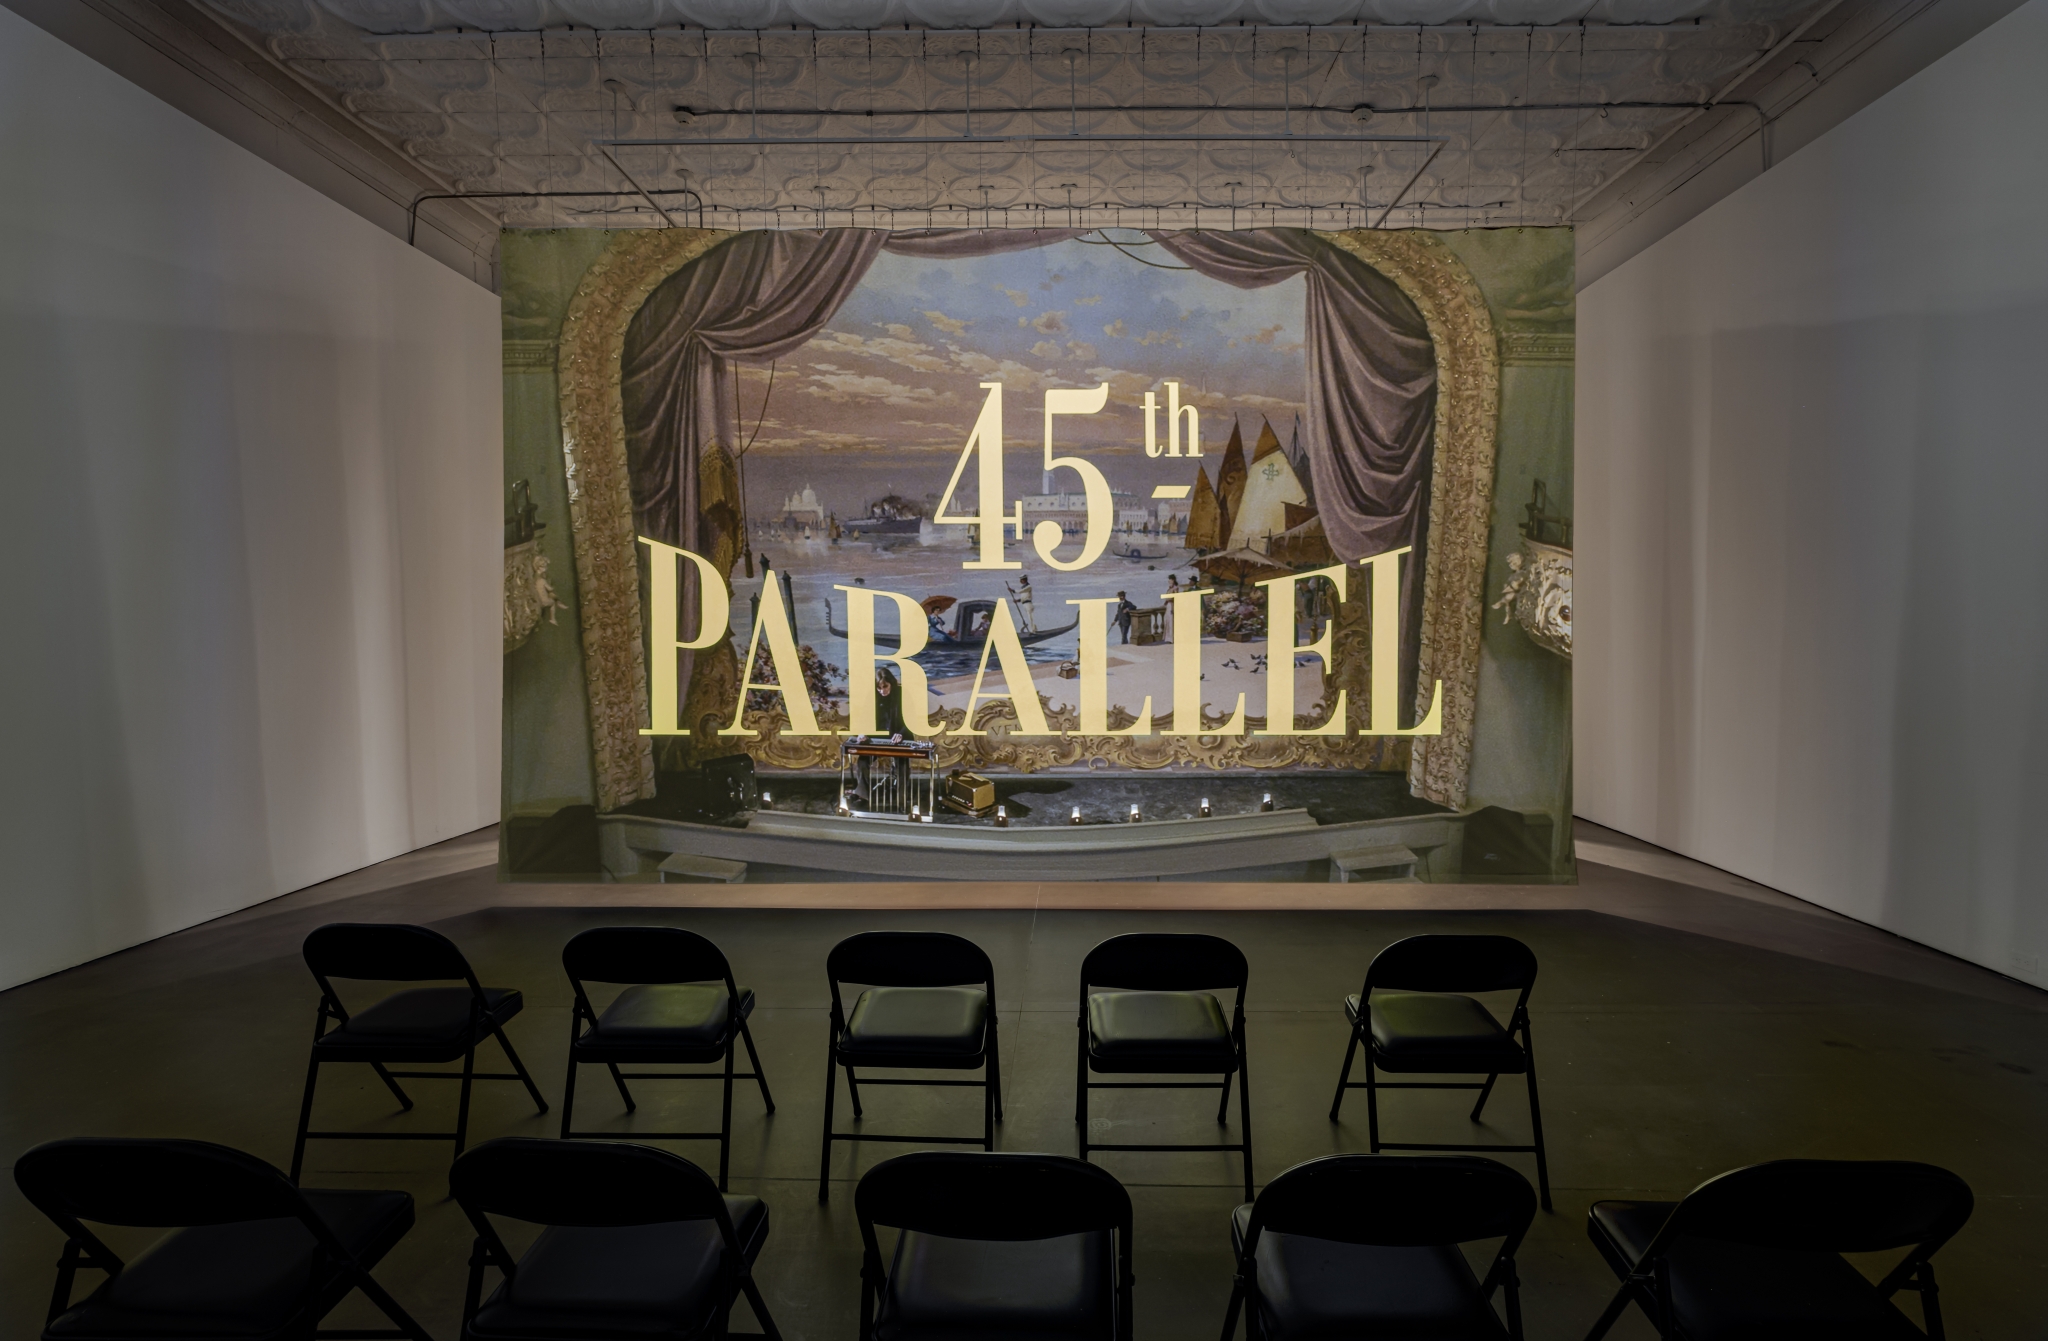 45th Parallel, 2022, Exhibition view, Mercer Union, Toronto Biennial 2022